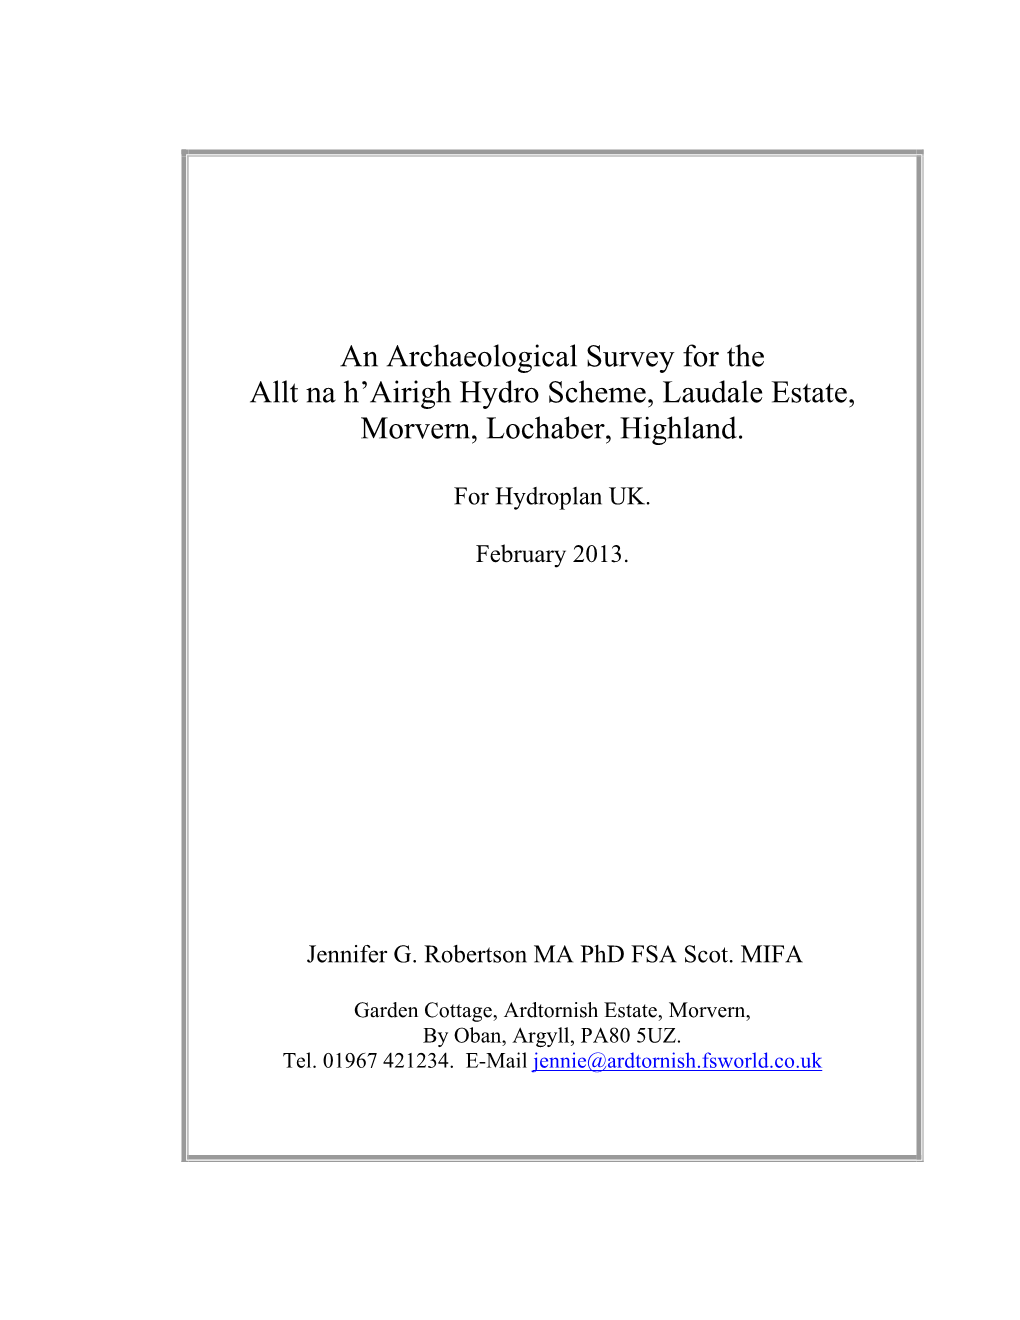 An Archaeological Survey for the Allt Na H' Airigh Hydro Scheme